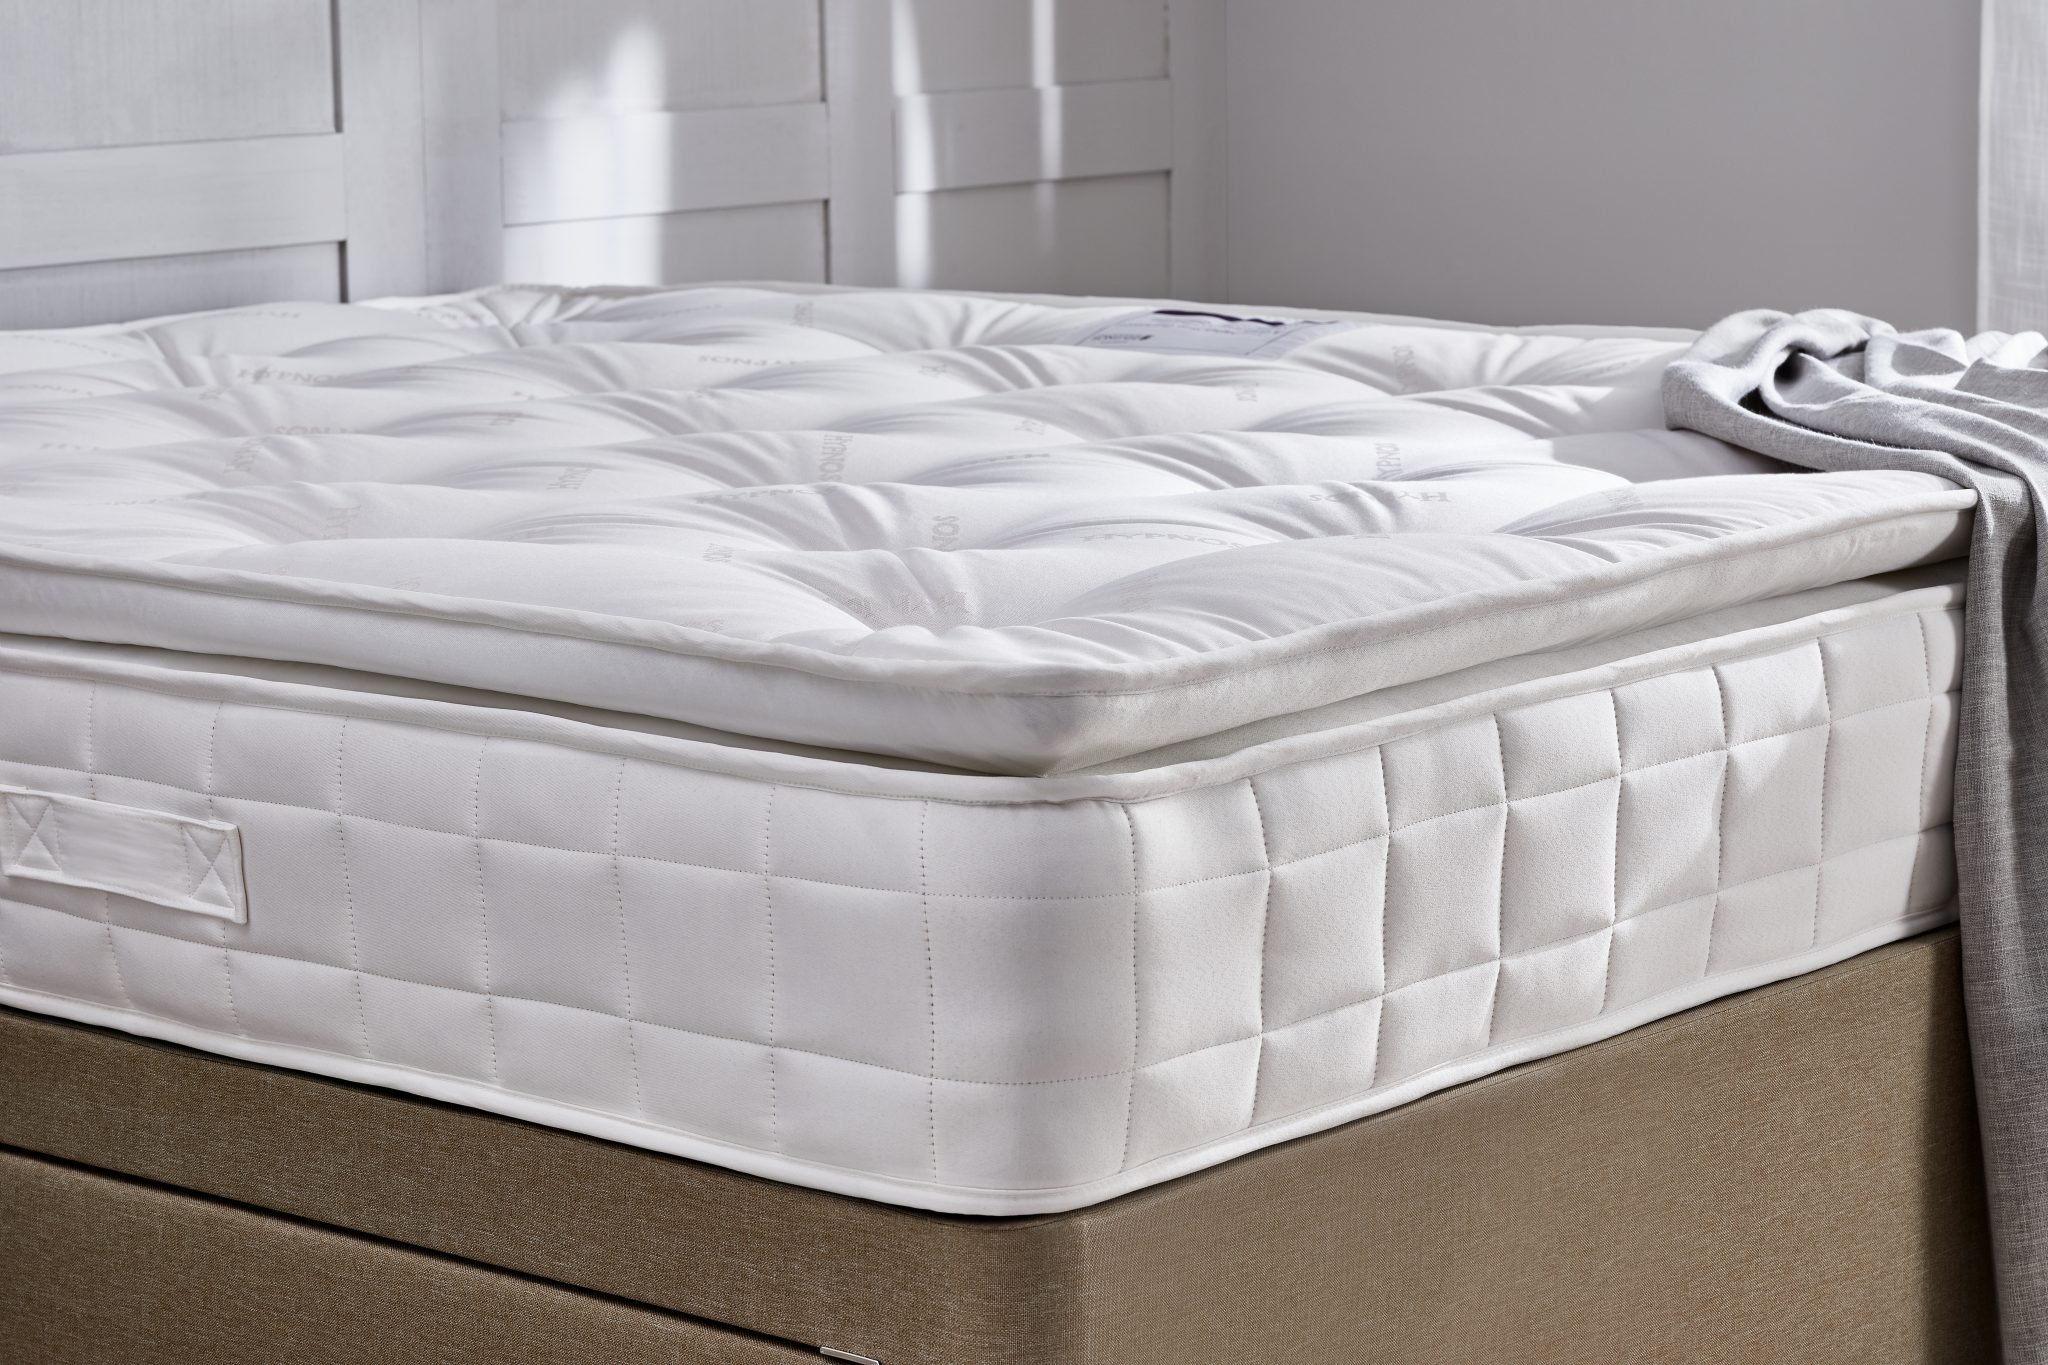 premier inn hypnos mattress buy